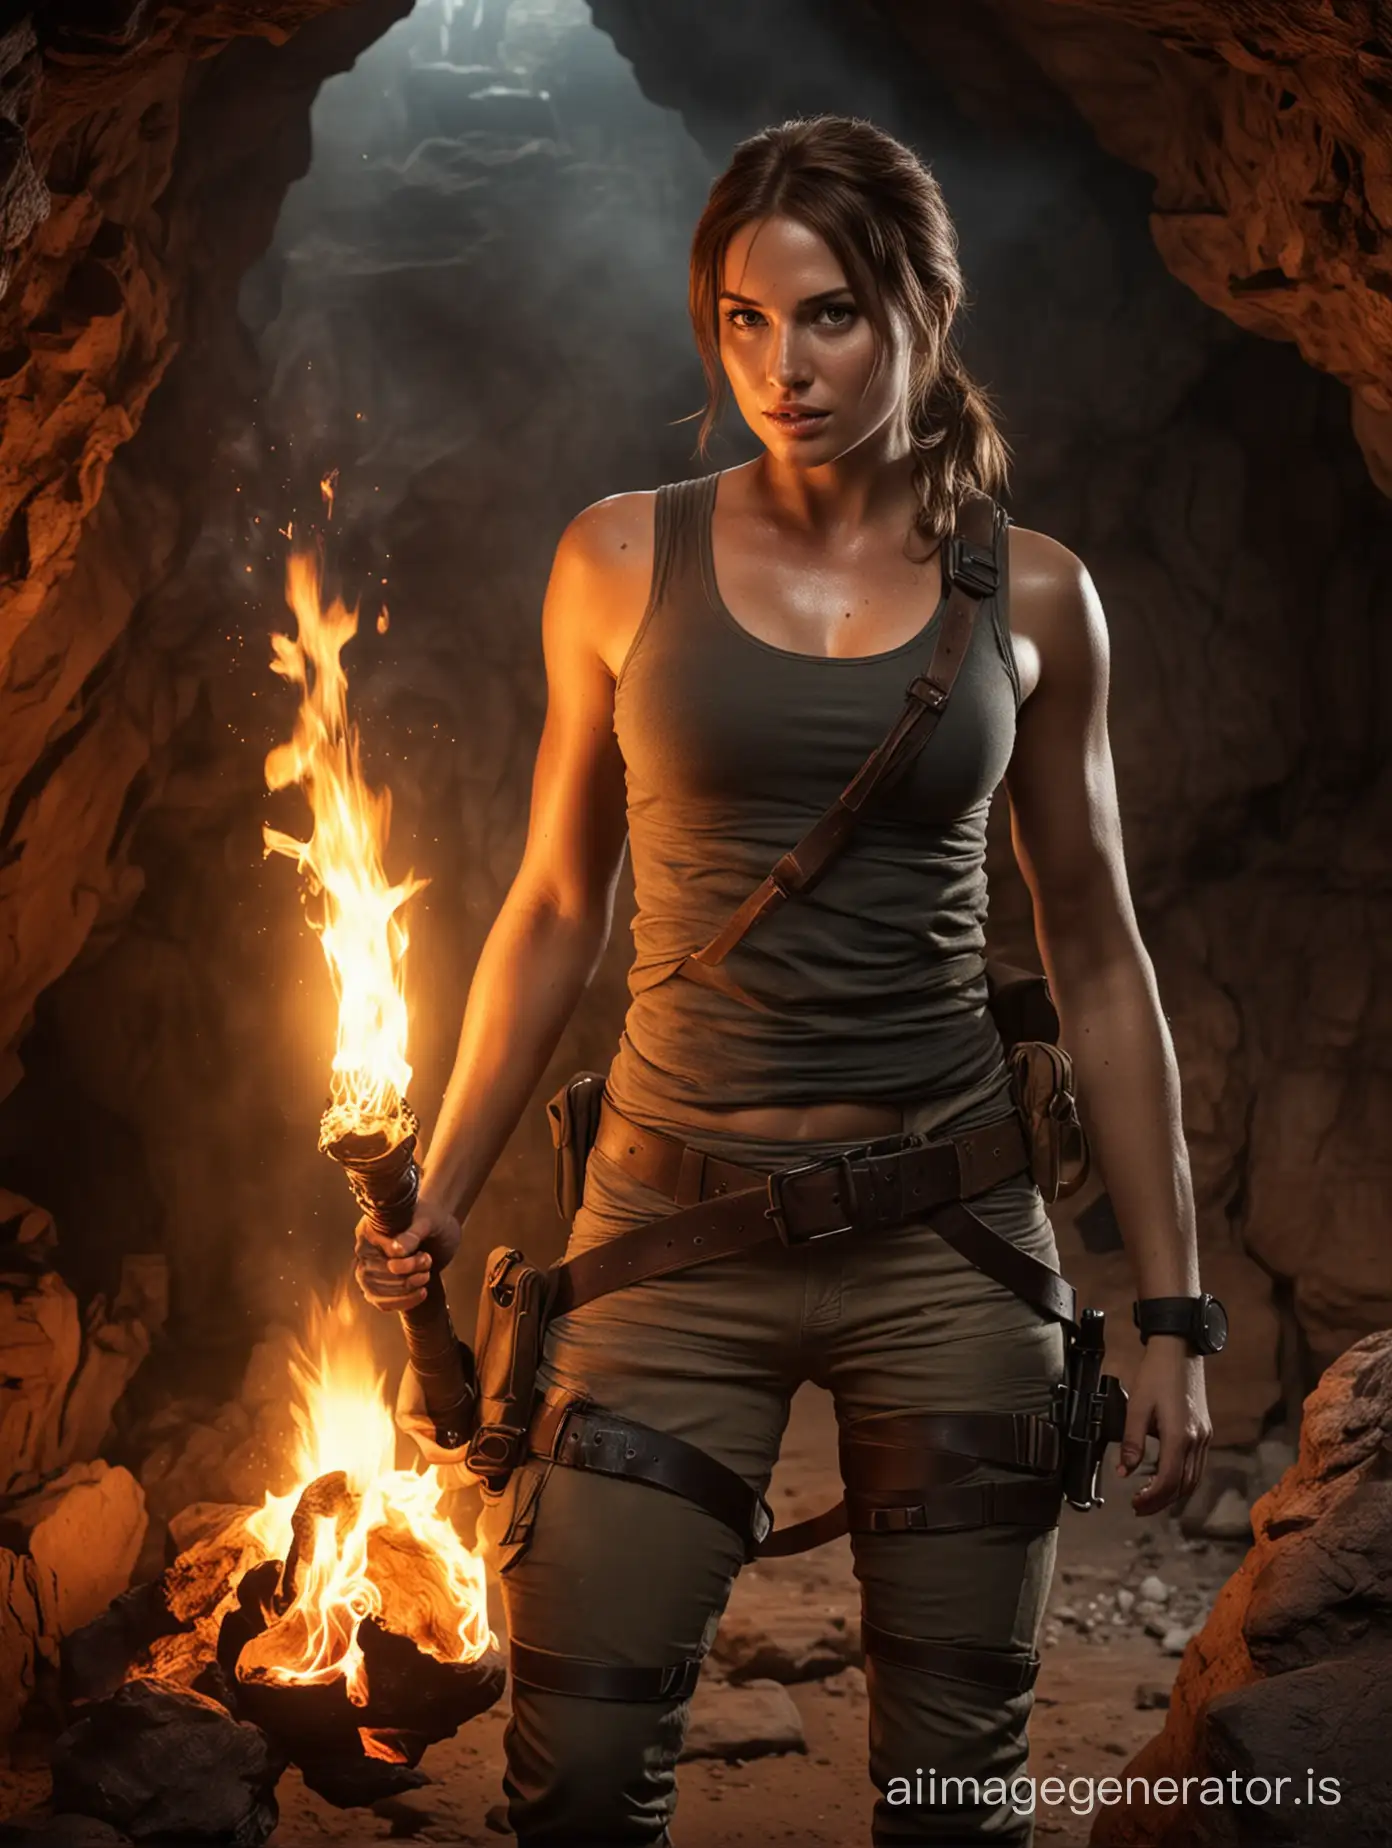 Anna-de-Armas-as-Lara-Croft-Explores-Mysterious-Cave-with-Flaming-Torch